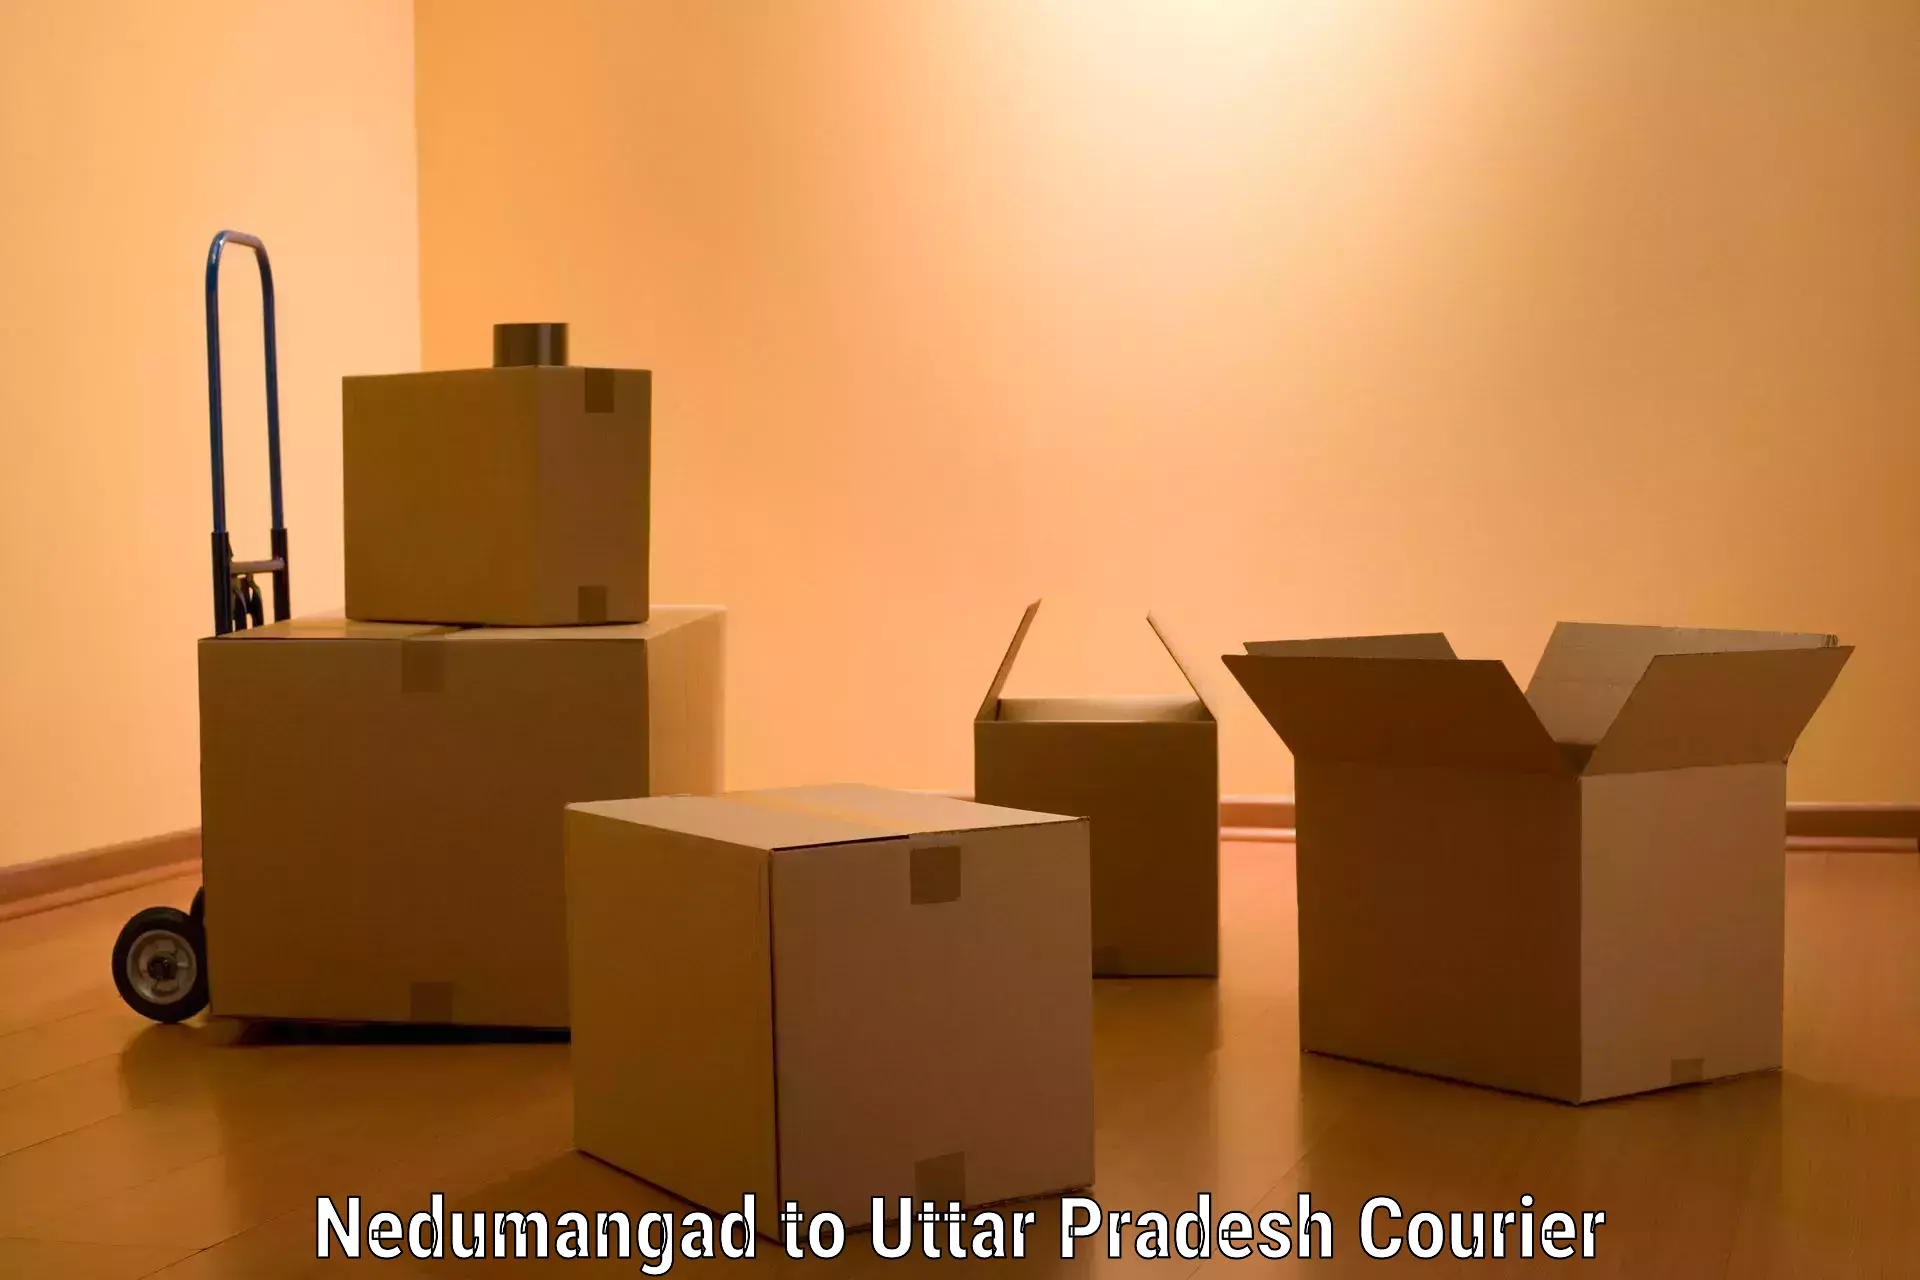 Budget-friendly movers Nedumangad to Aligarh Muslim University